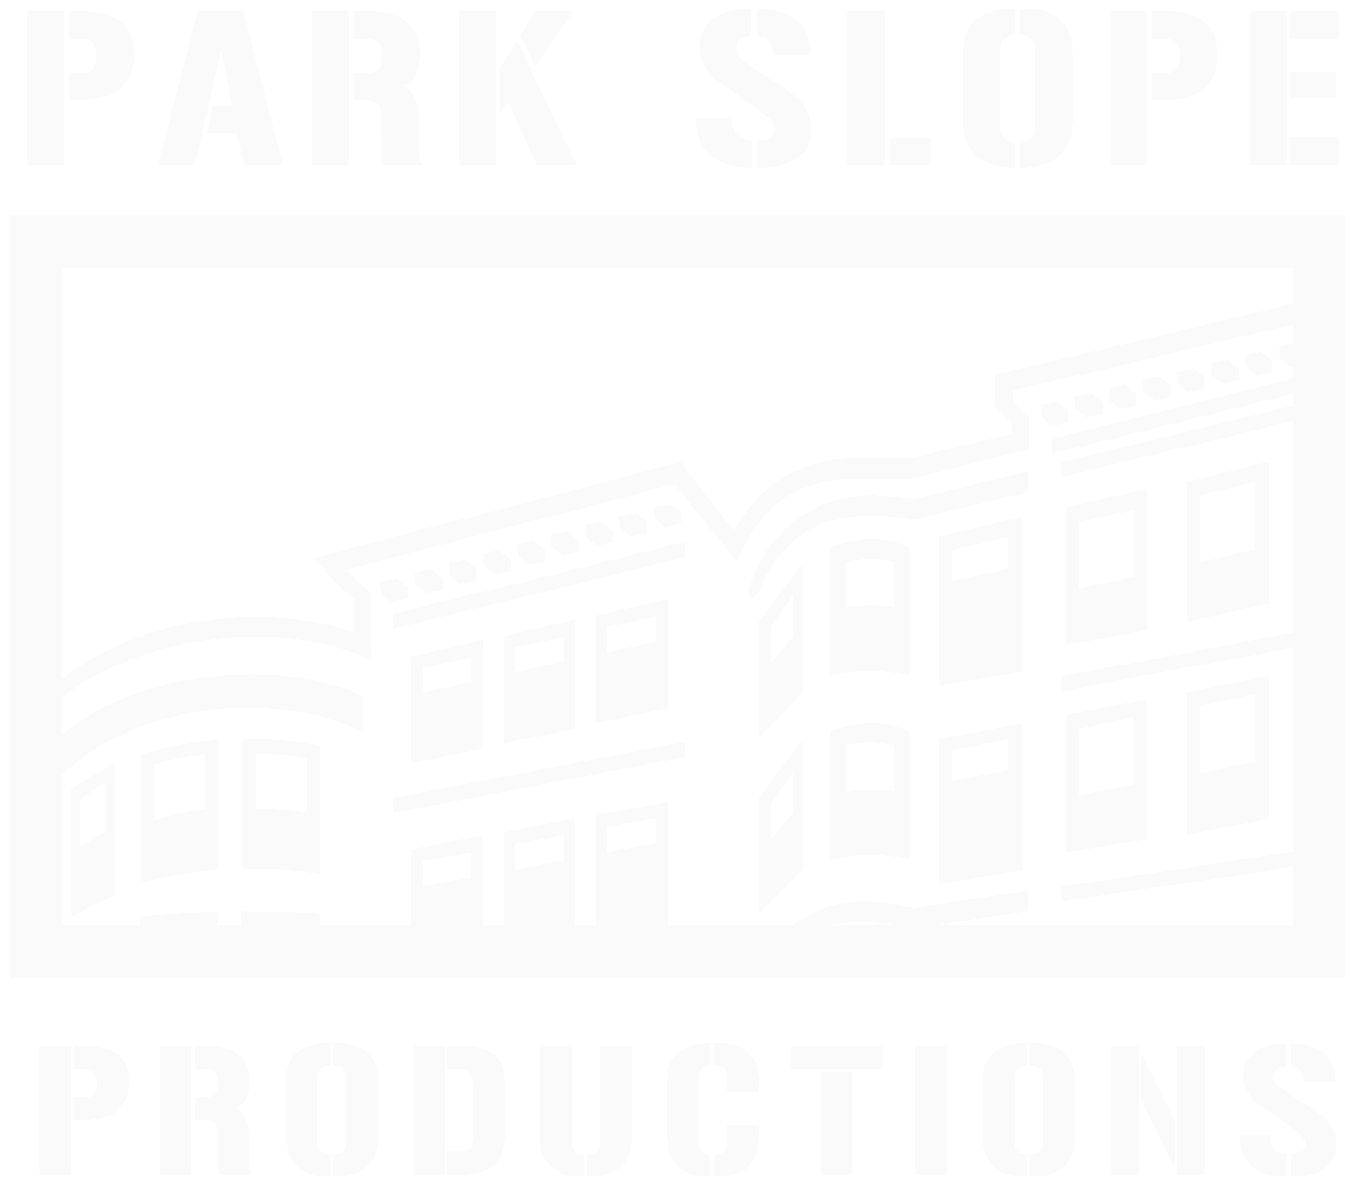 Park Slope Productions